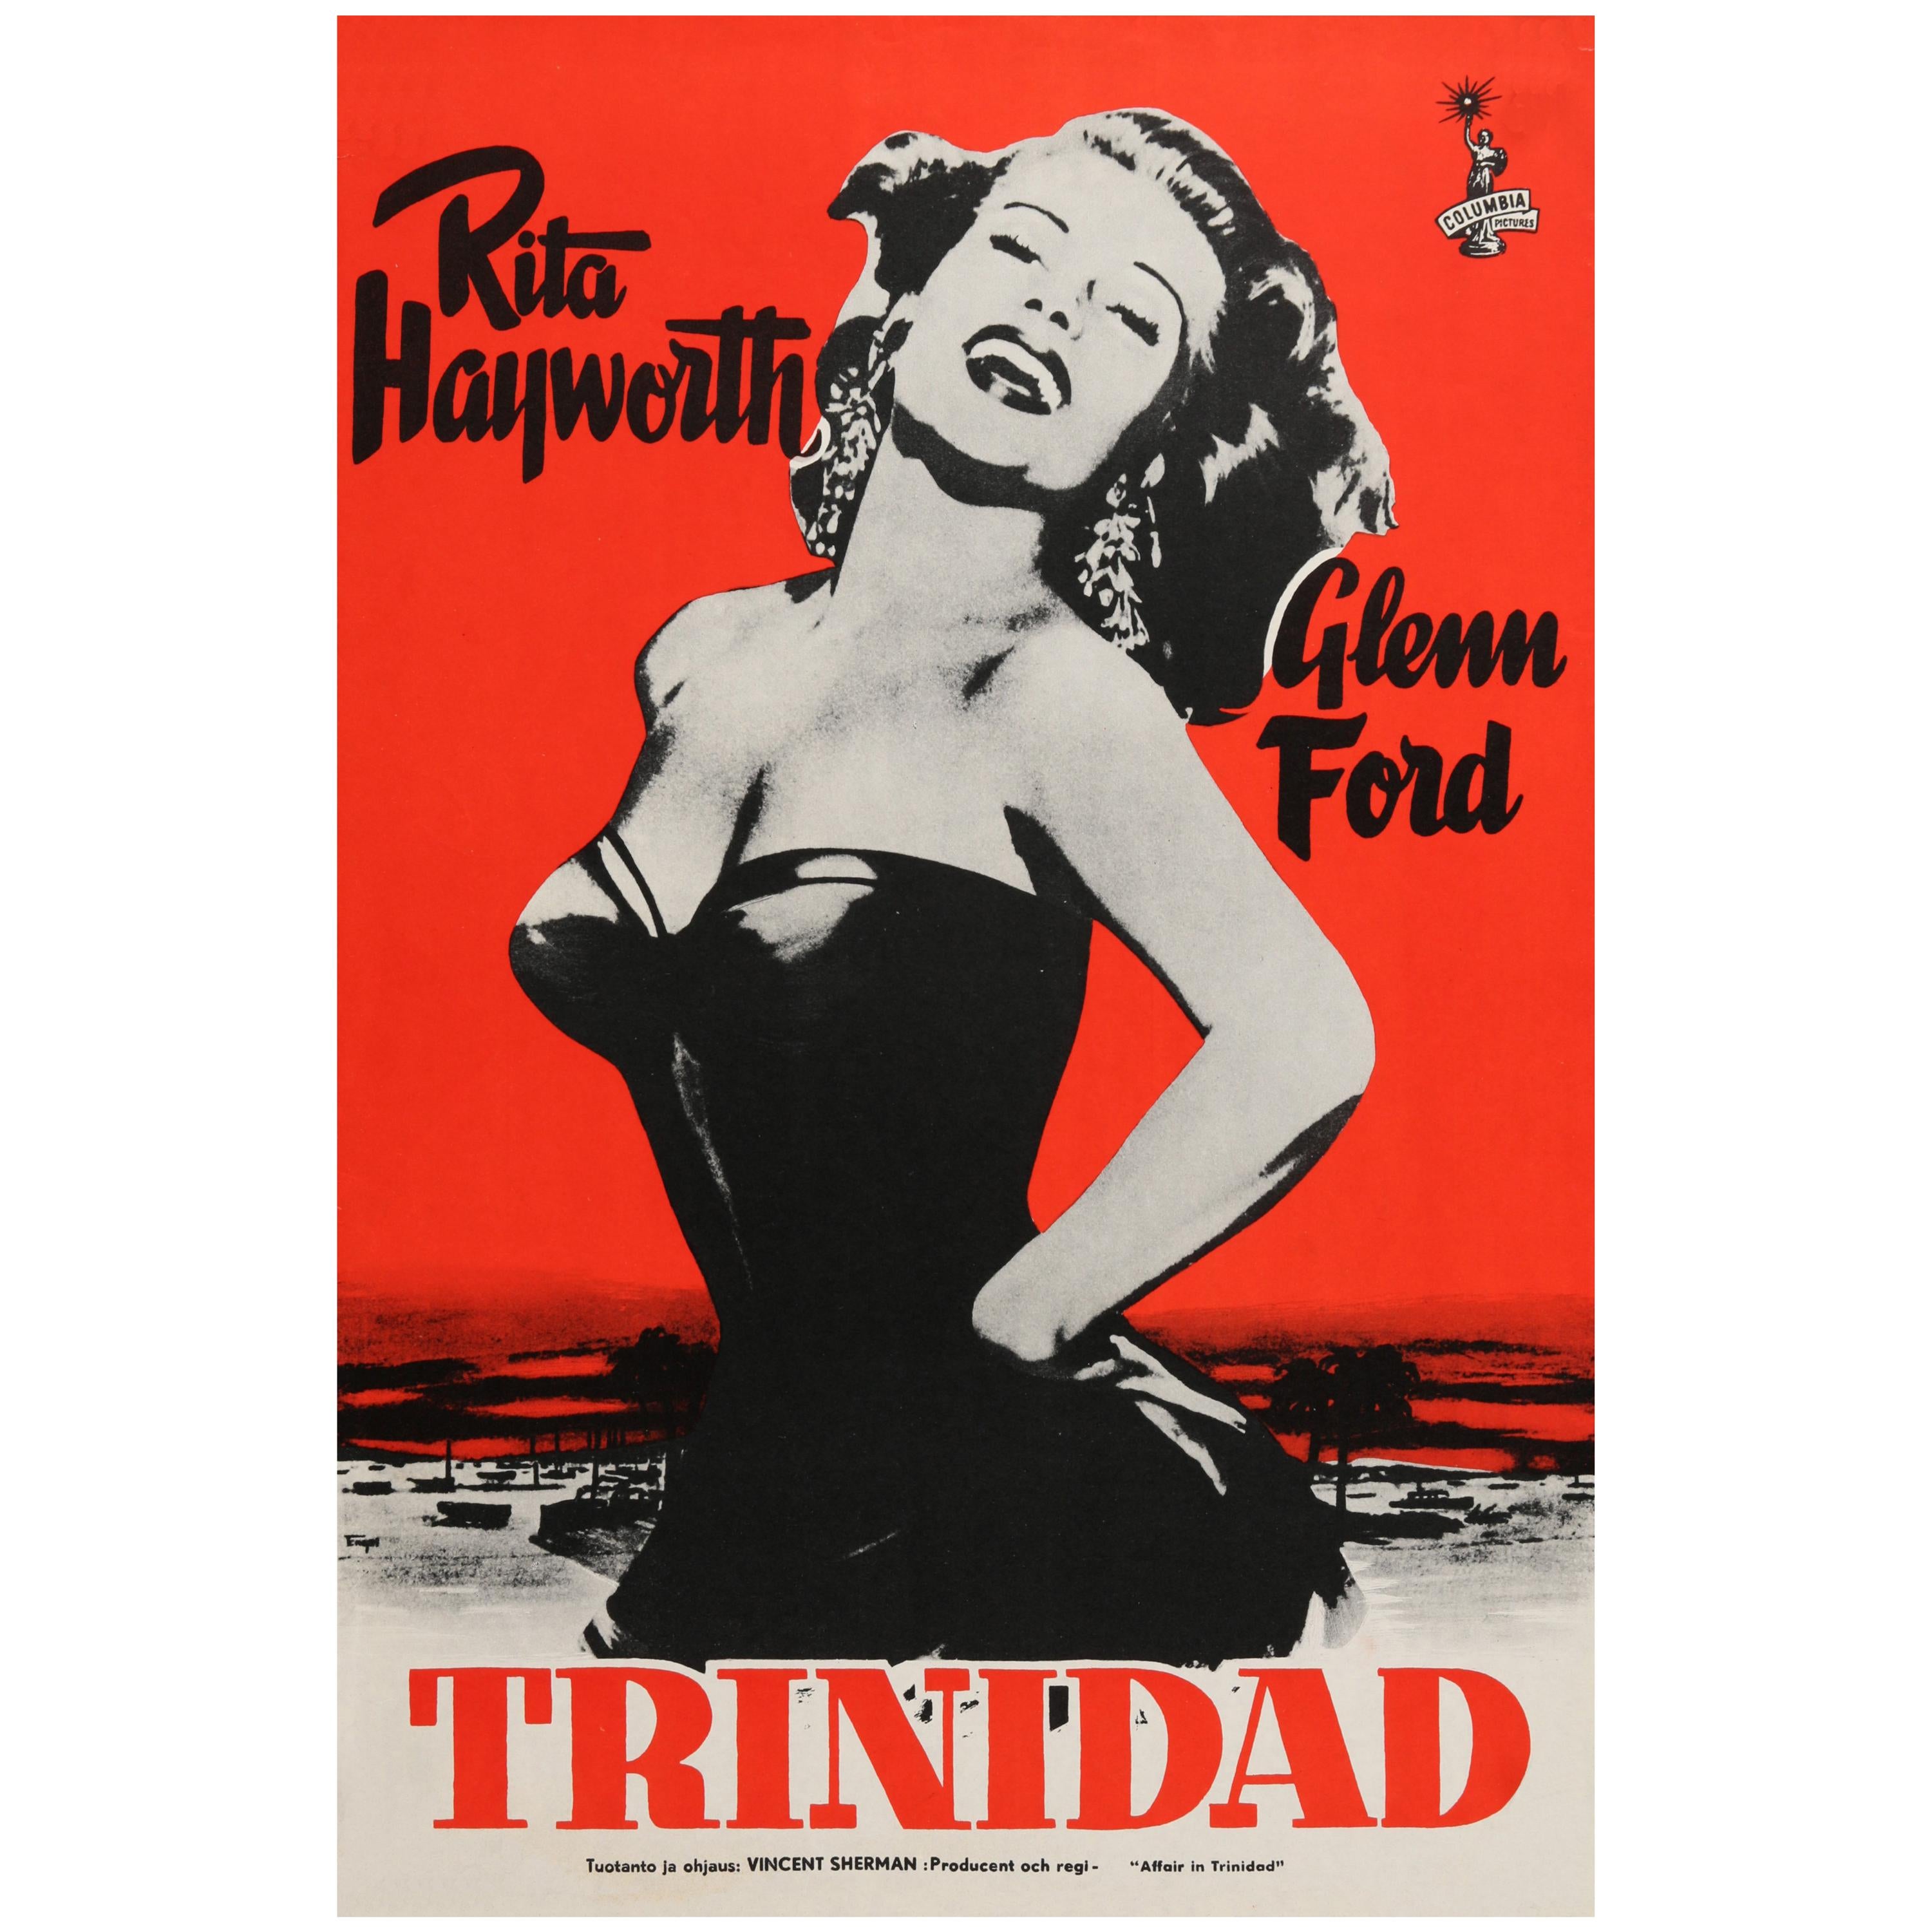 Rita Hayworth "Affair in Trinidad" Original Vintage Movie Poster, Finnish, 1952